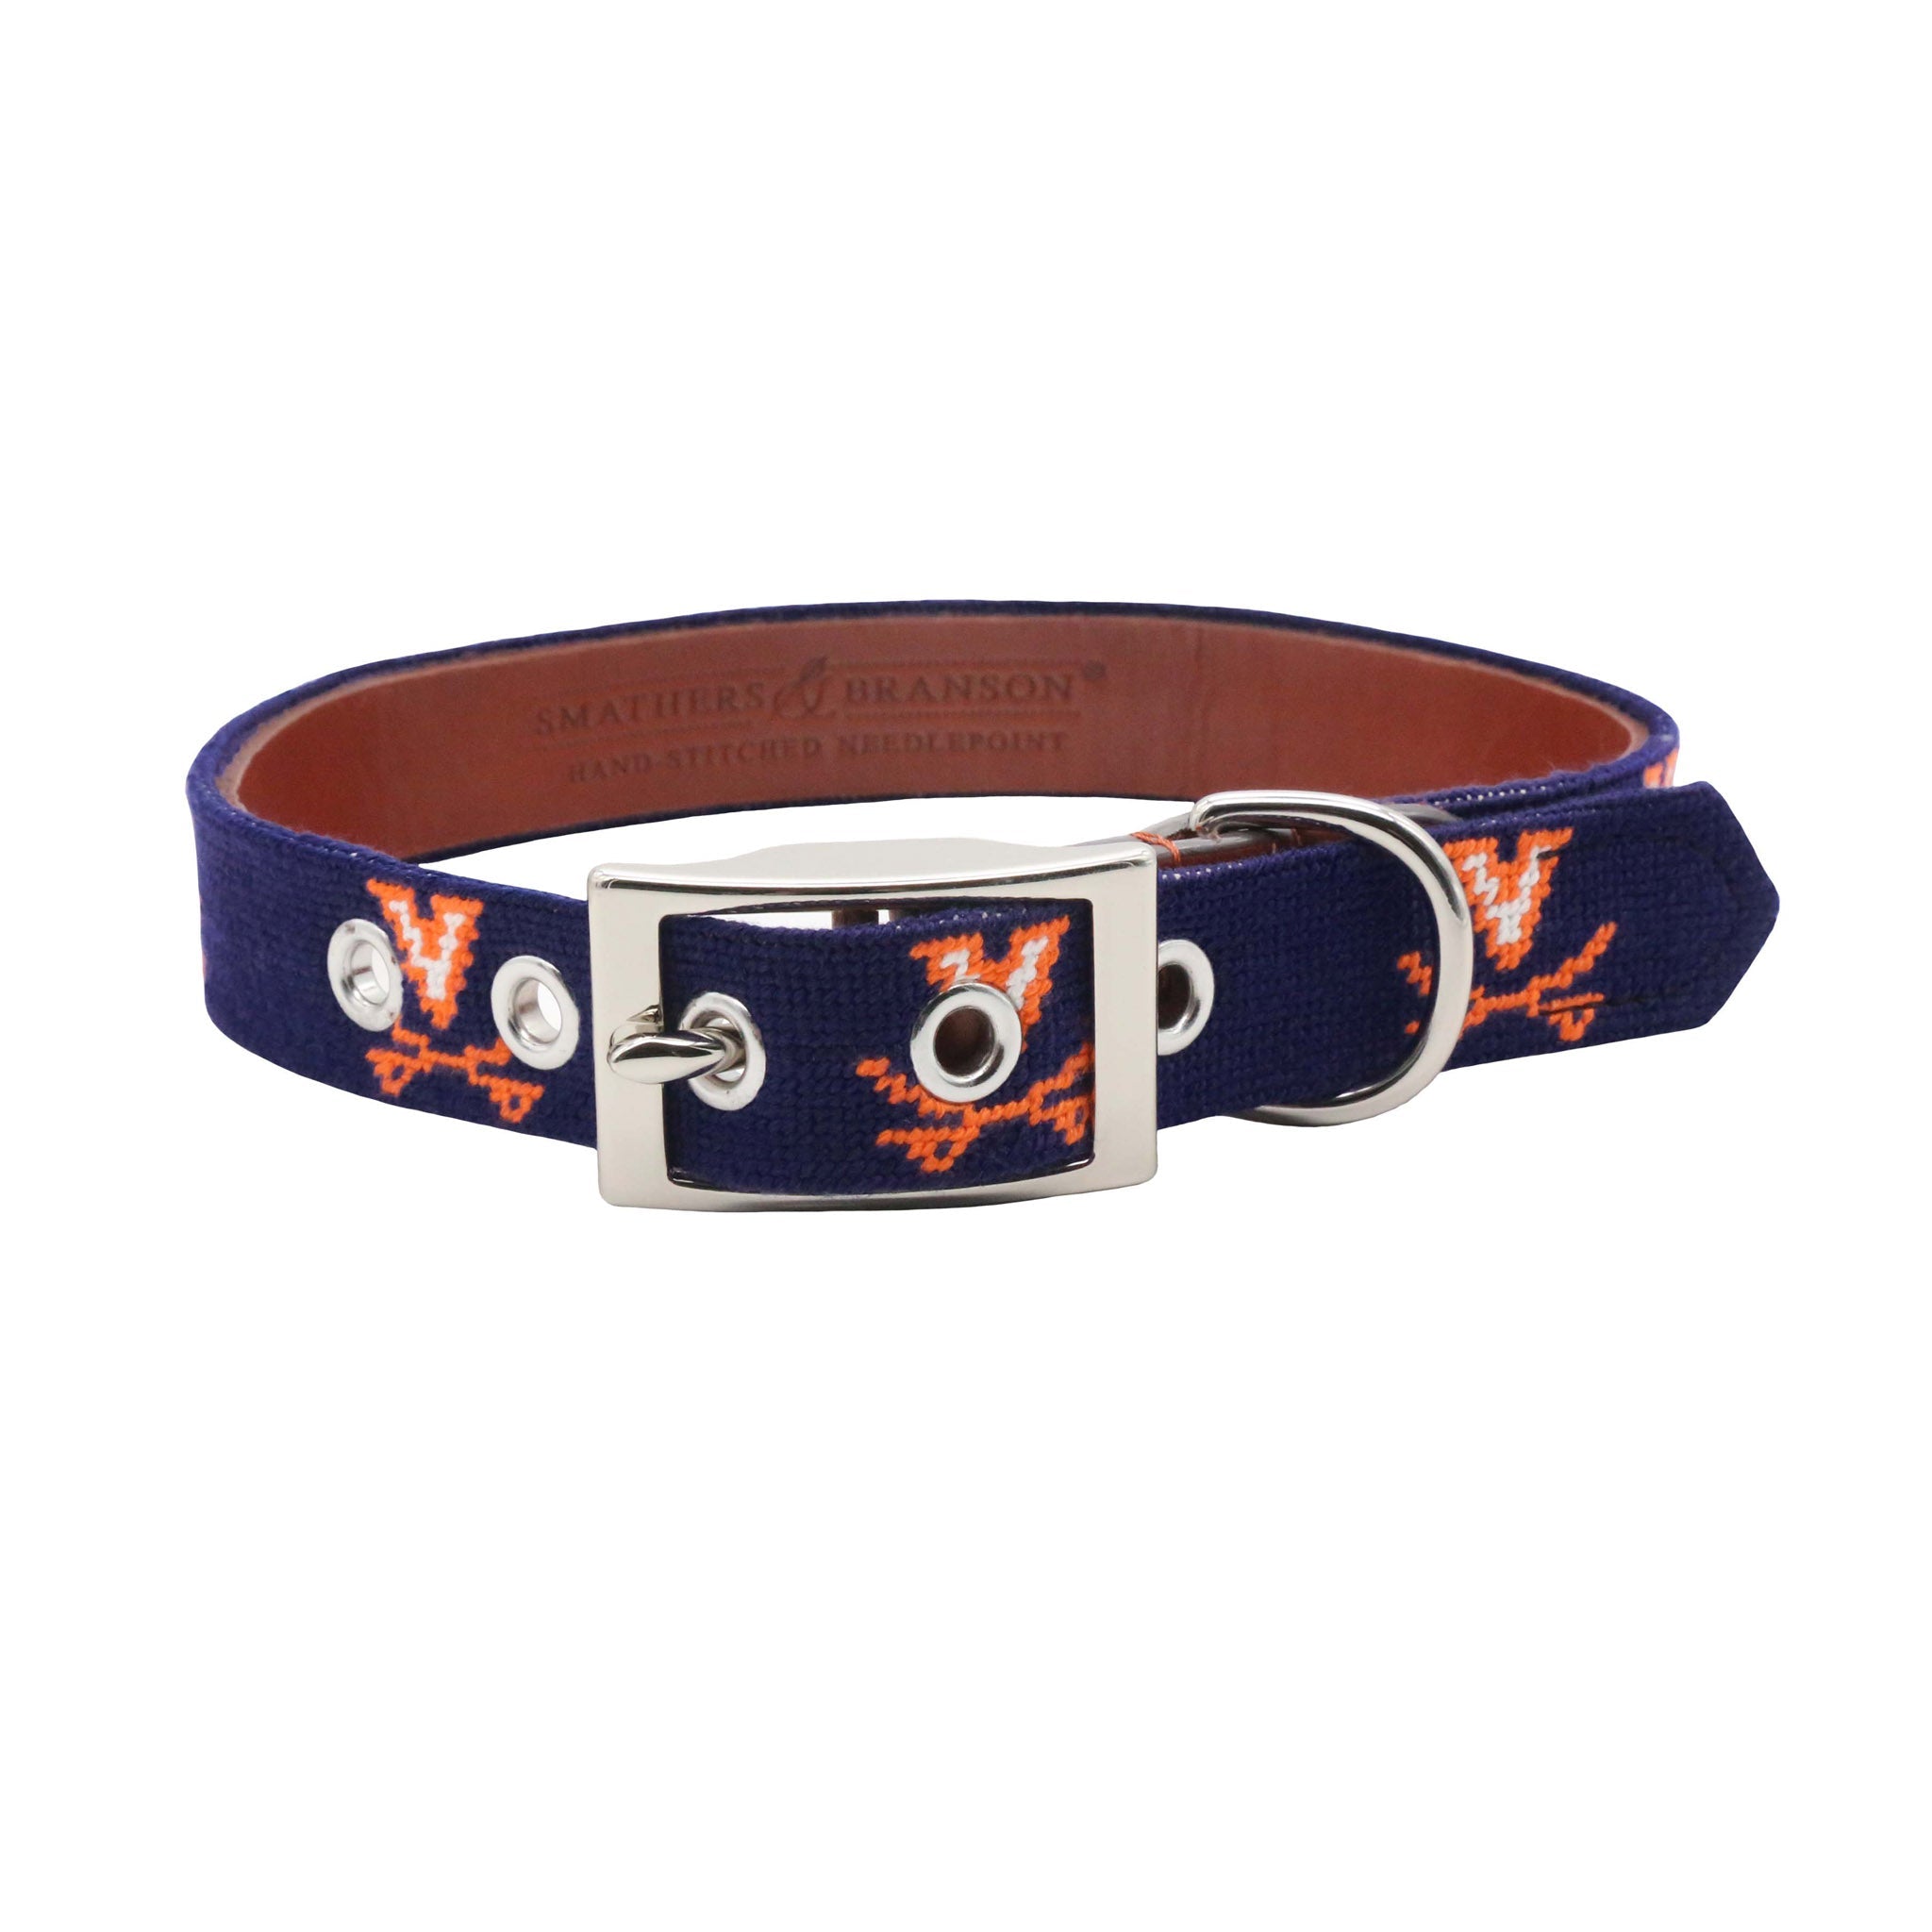 Smathers & Branson University of Virginia Needlepoint Dog Collar